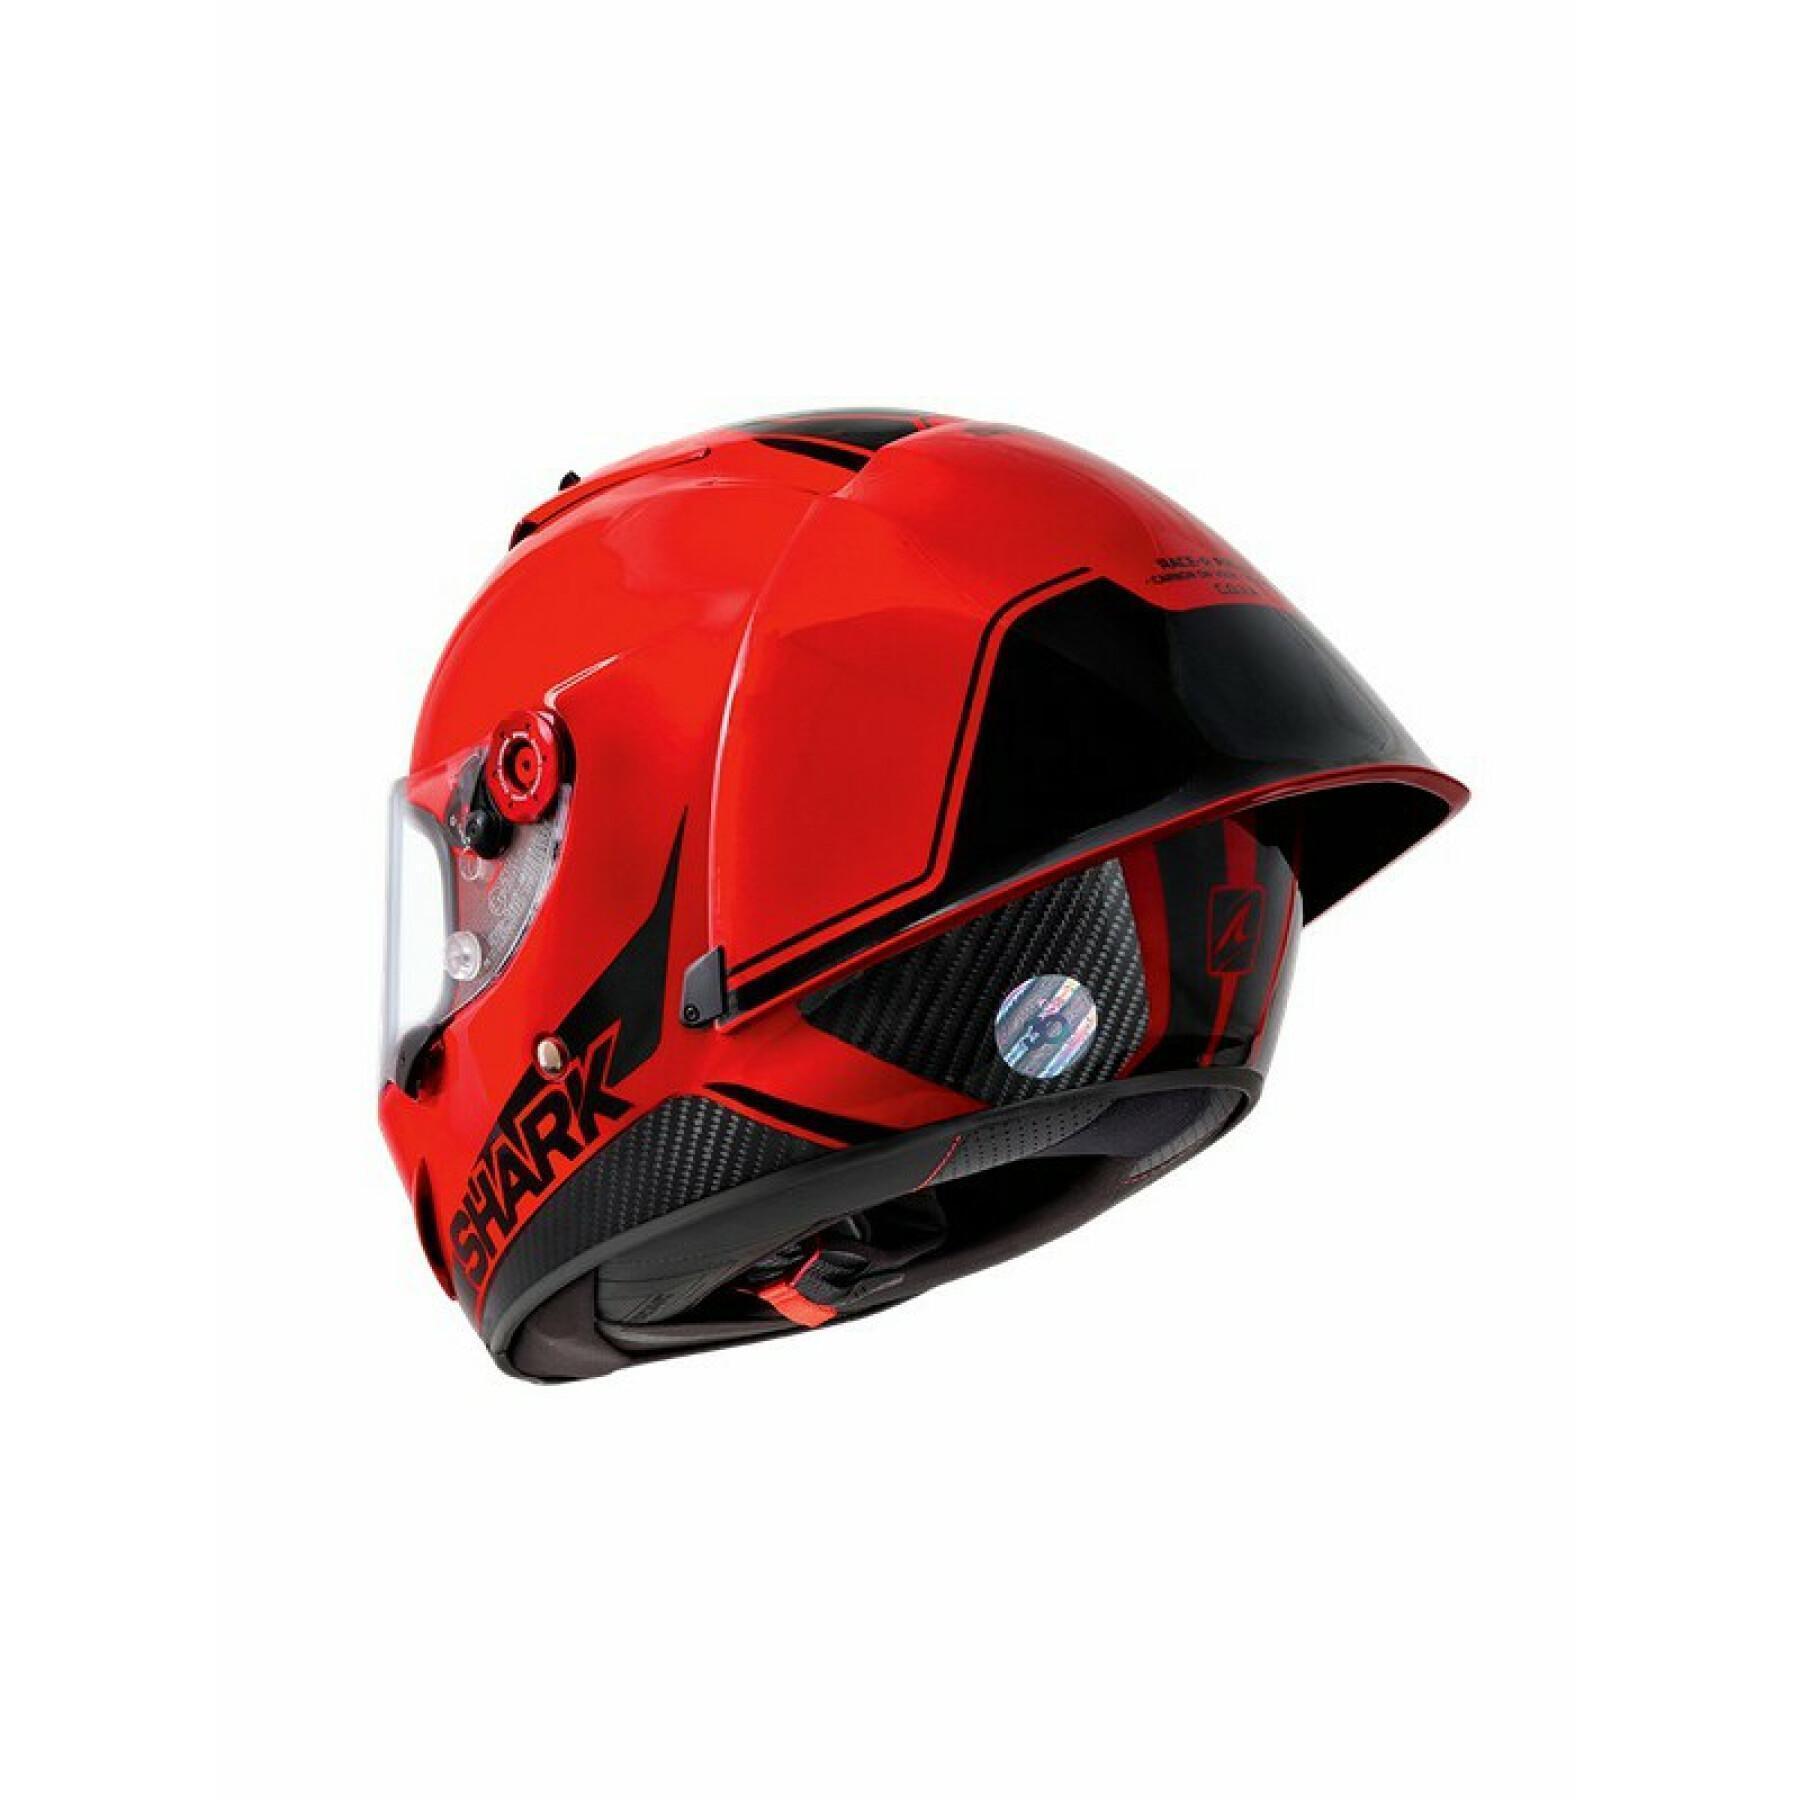 Full face motorcycle helmet Shark race-r pro GP blank 30th anniversary